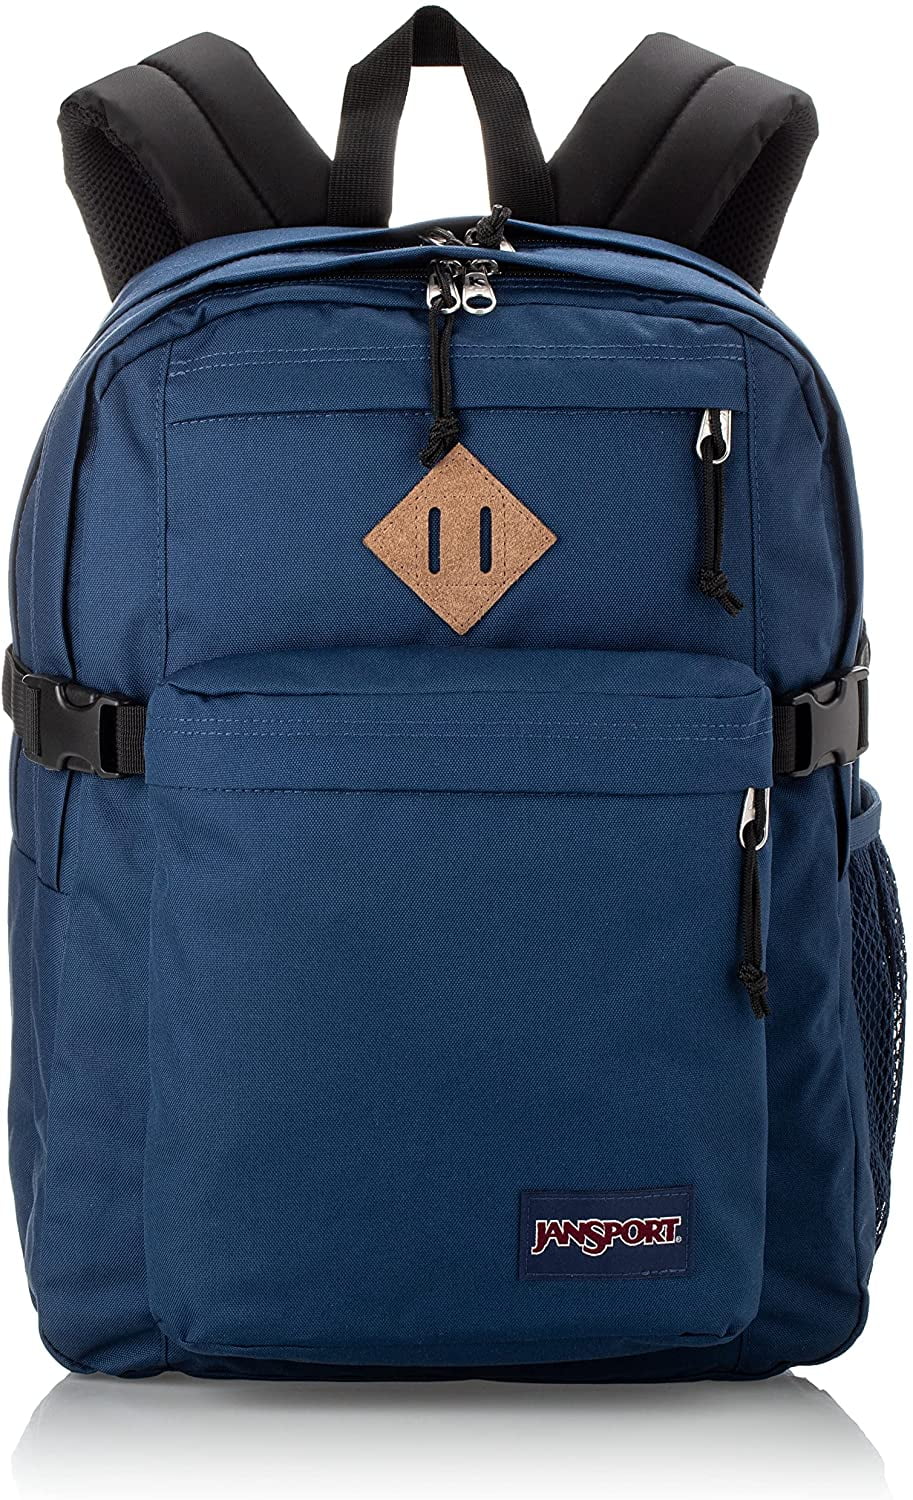 JanSport Main Campus FX Backpack - School, Travel, or Work Bookbag w 15 ...